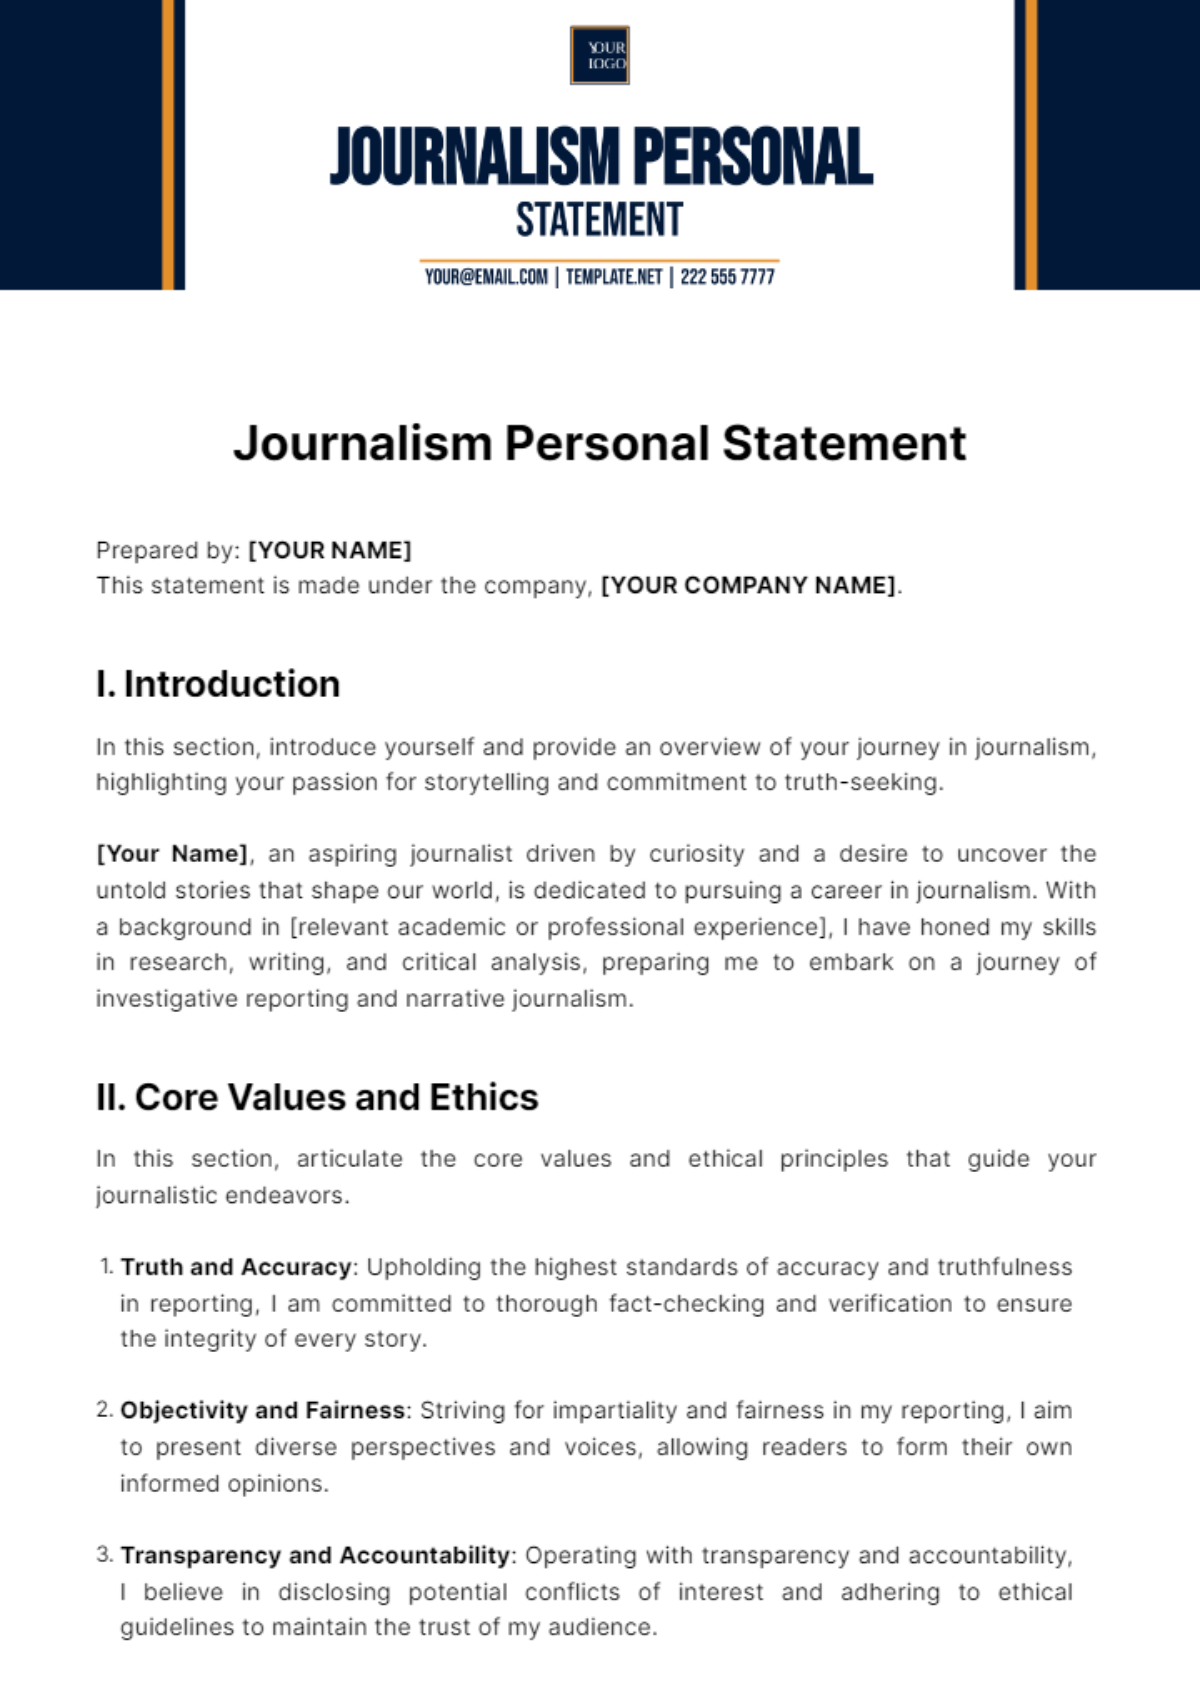 Journalism Personal Statement Template